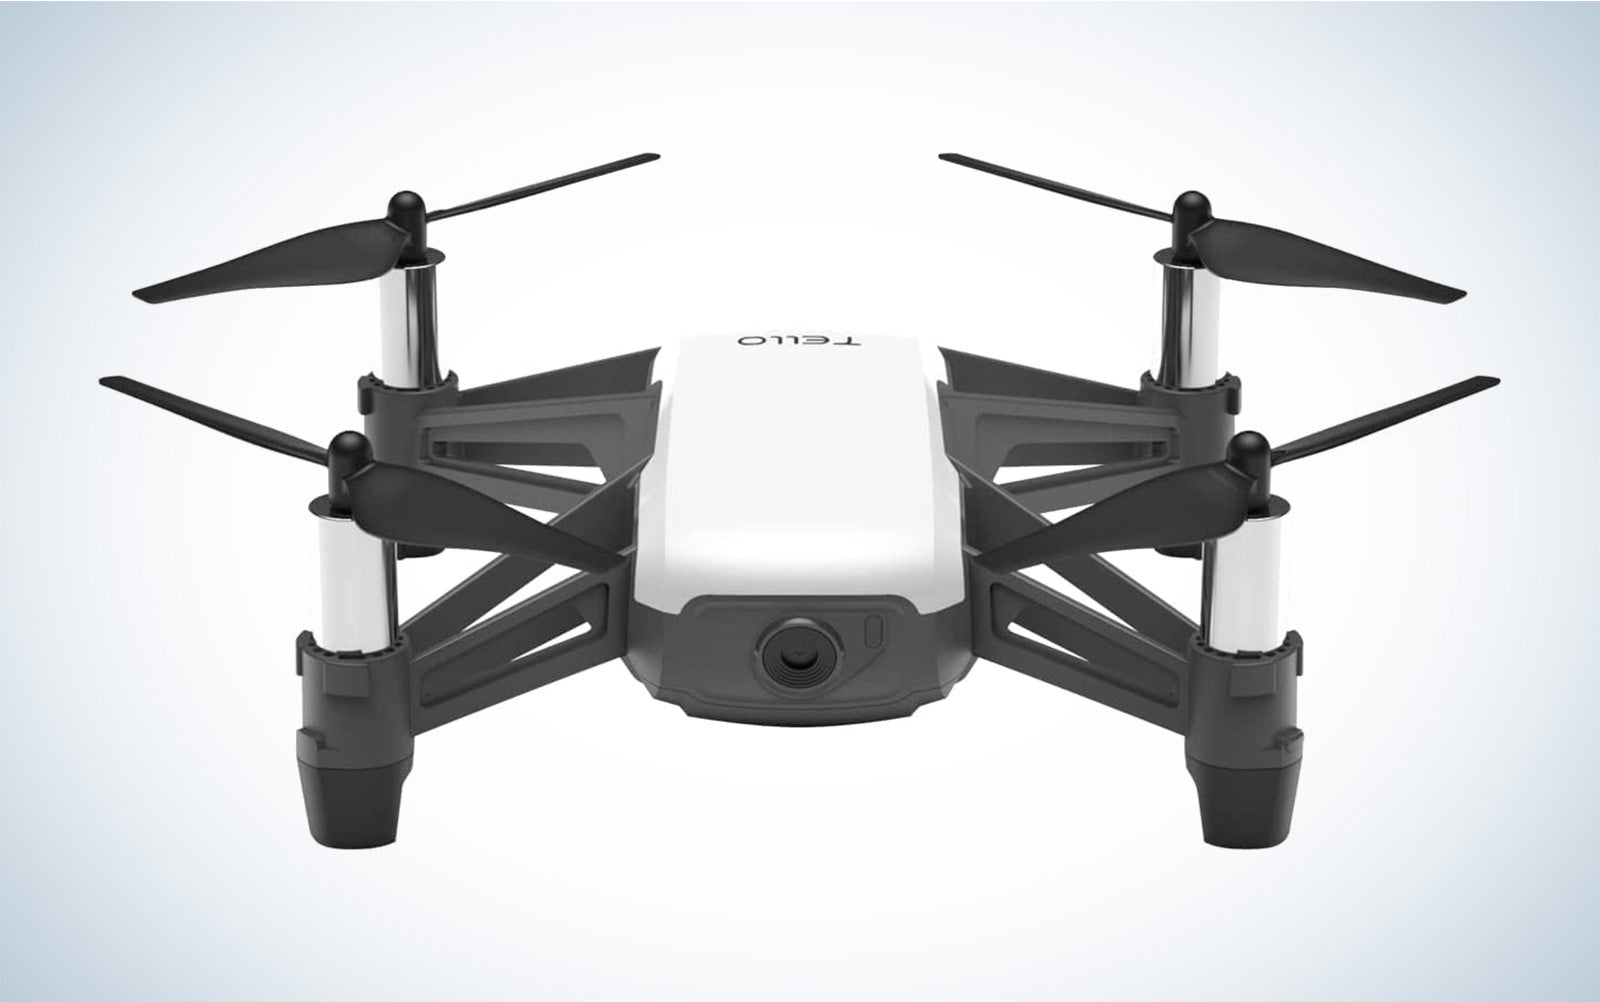 The Tello FPV drone facing forward on a plain background